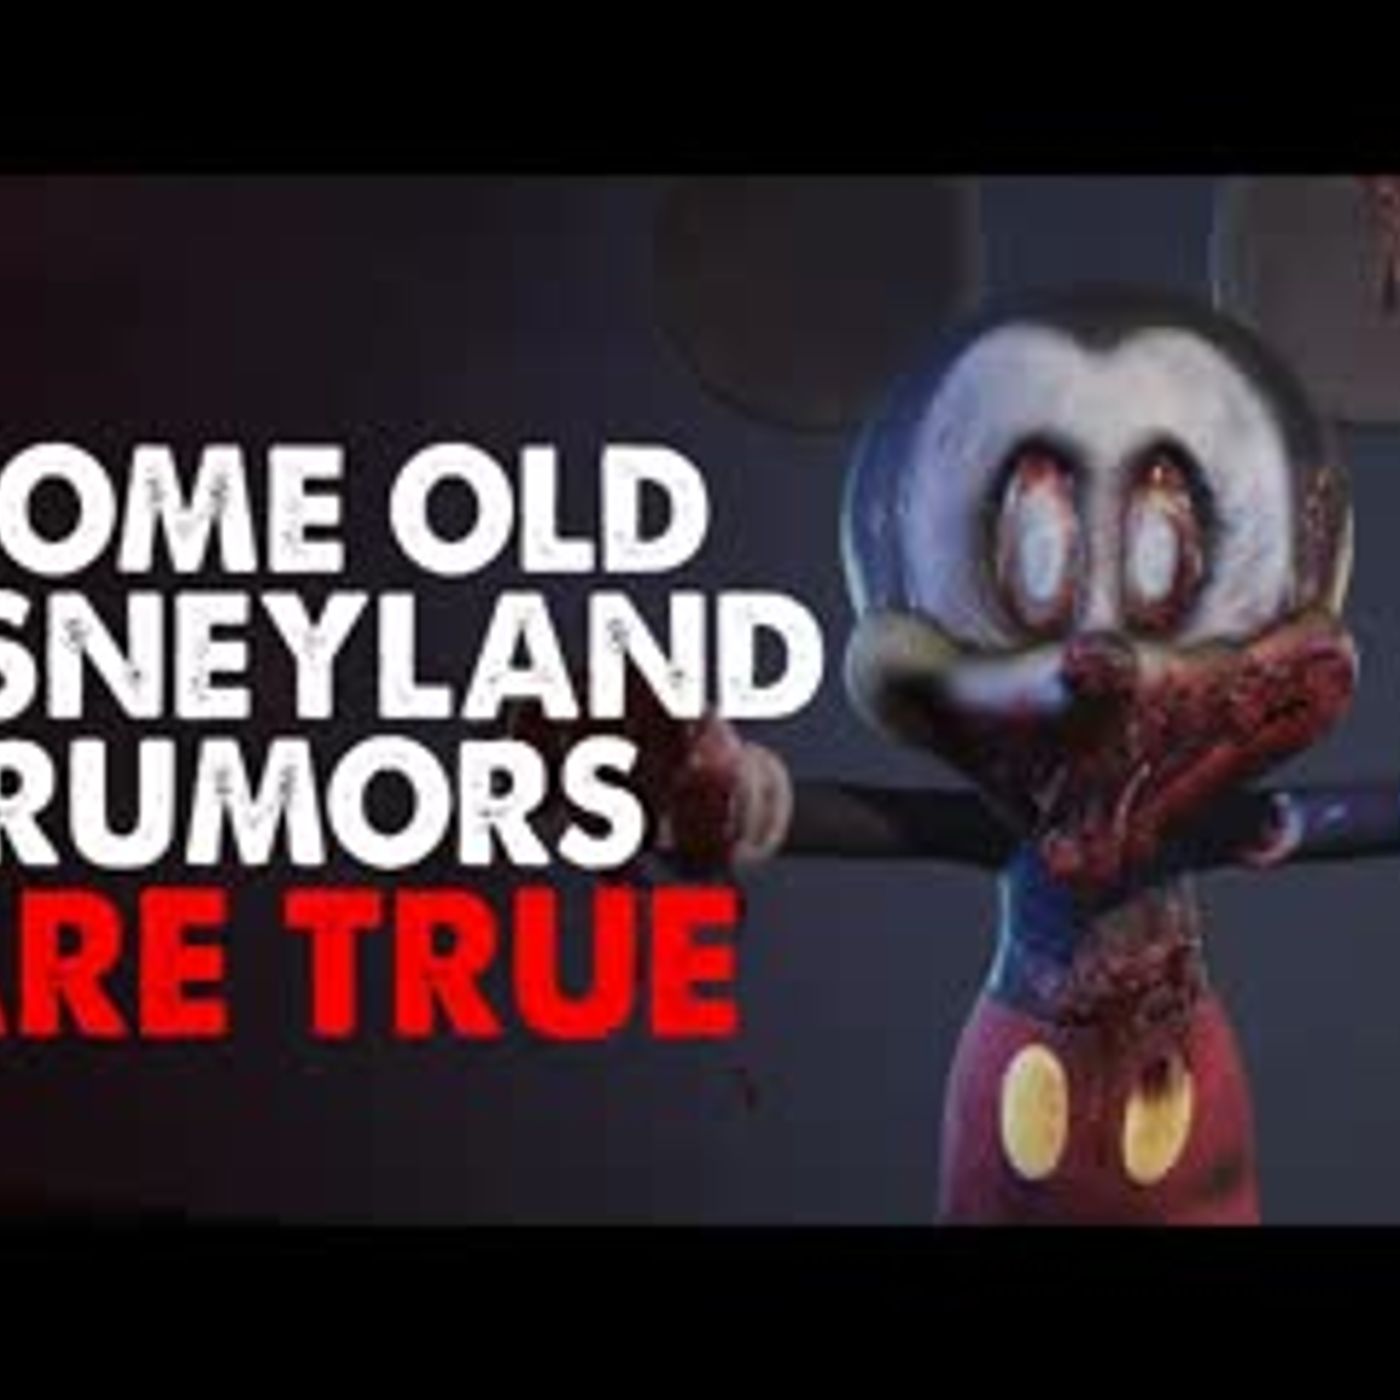 "Some old Disneyland rumors are true" Creepypasta